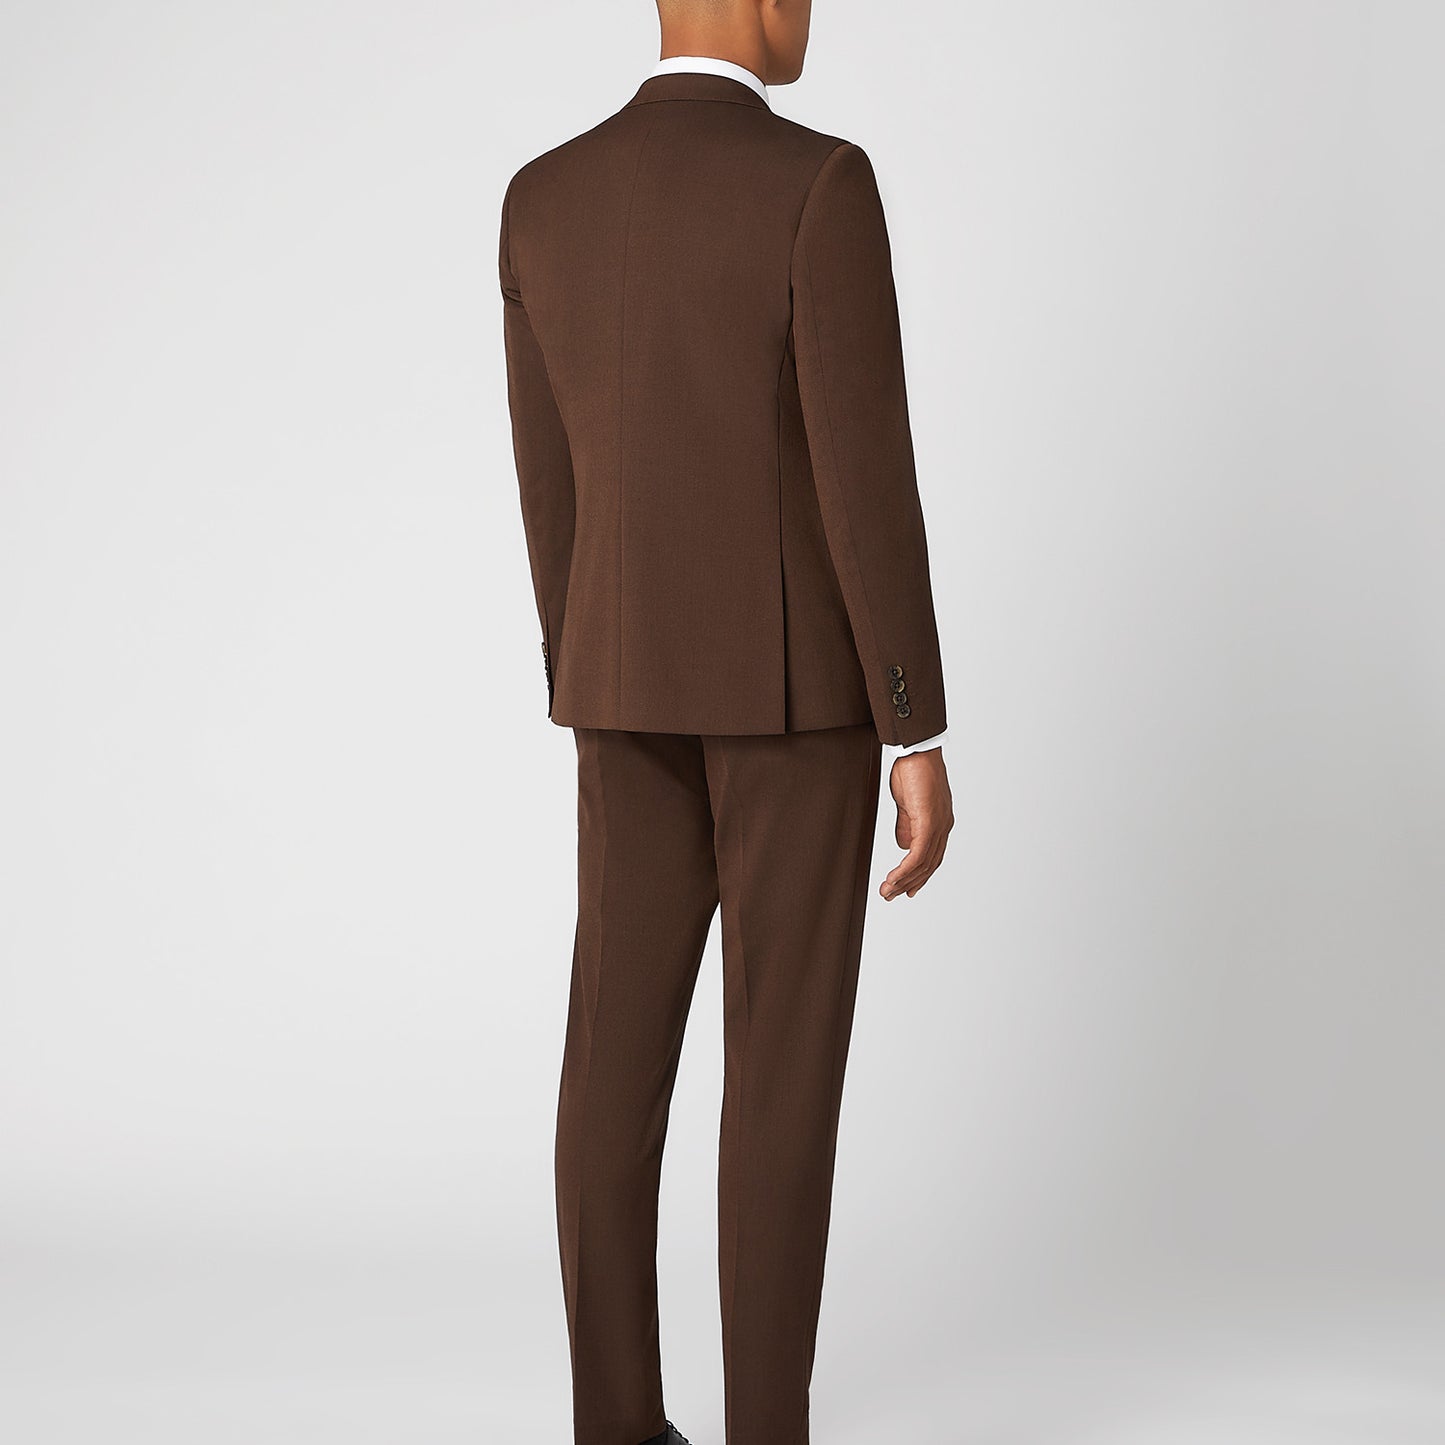 Remus Uomo 22179 46 Brown X-Slim Suit